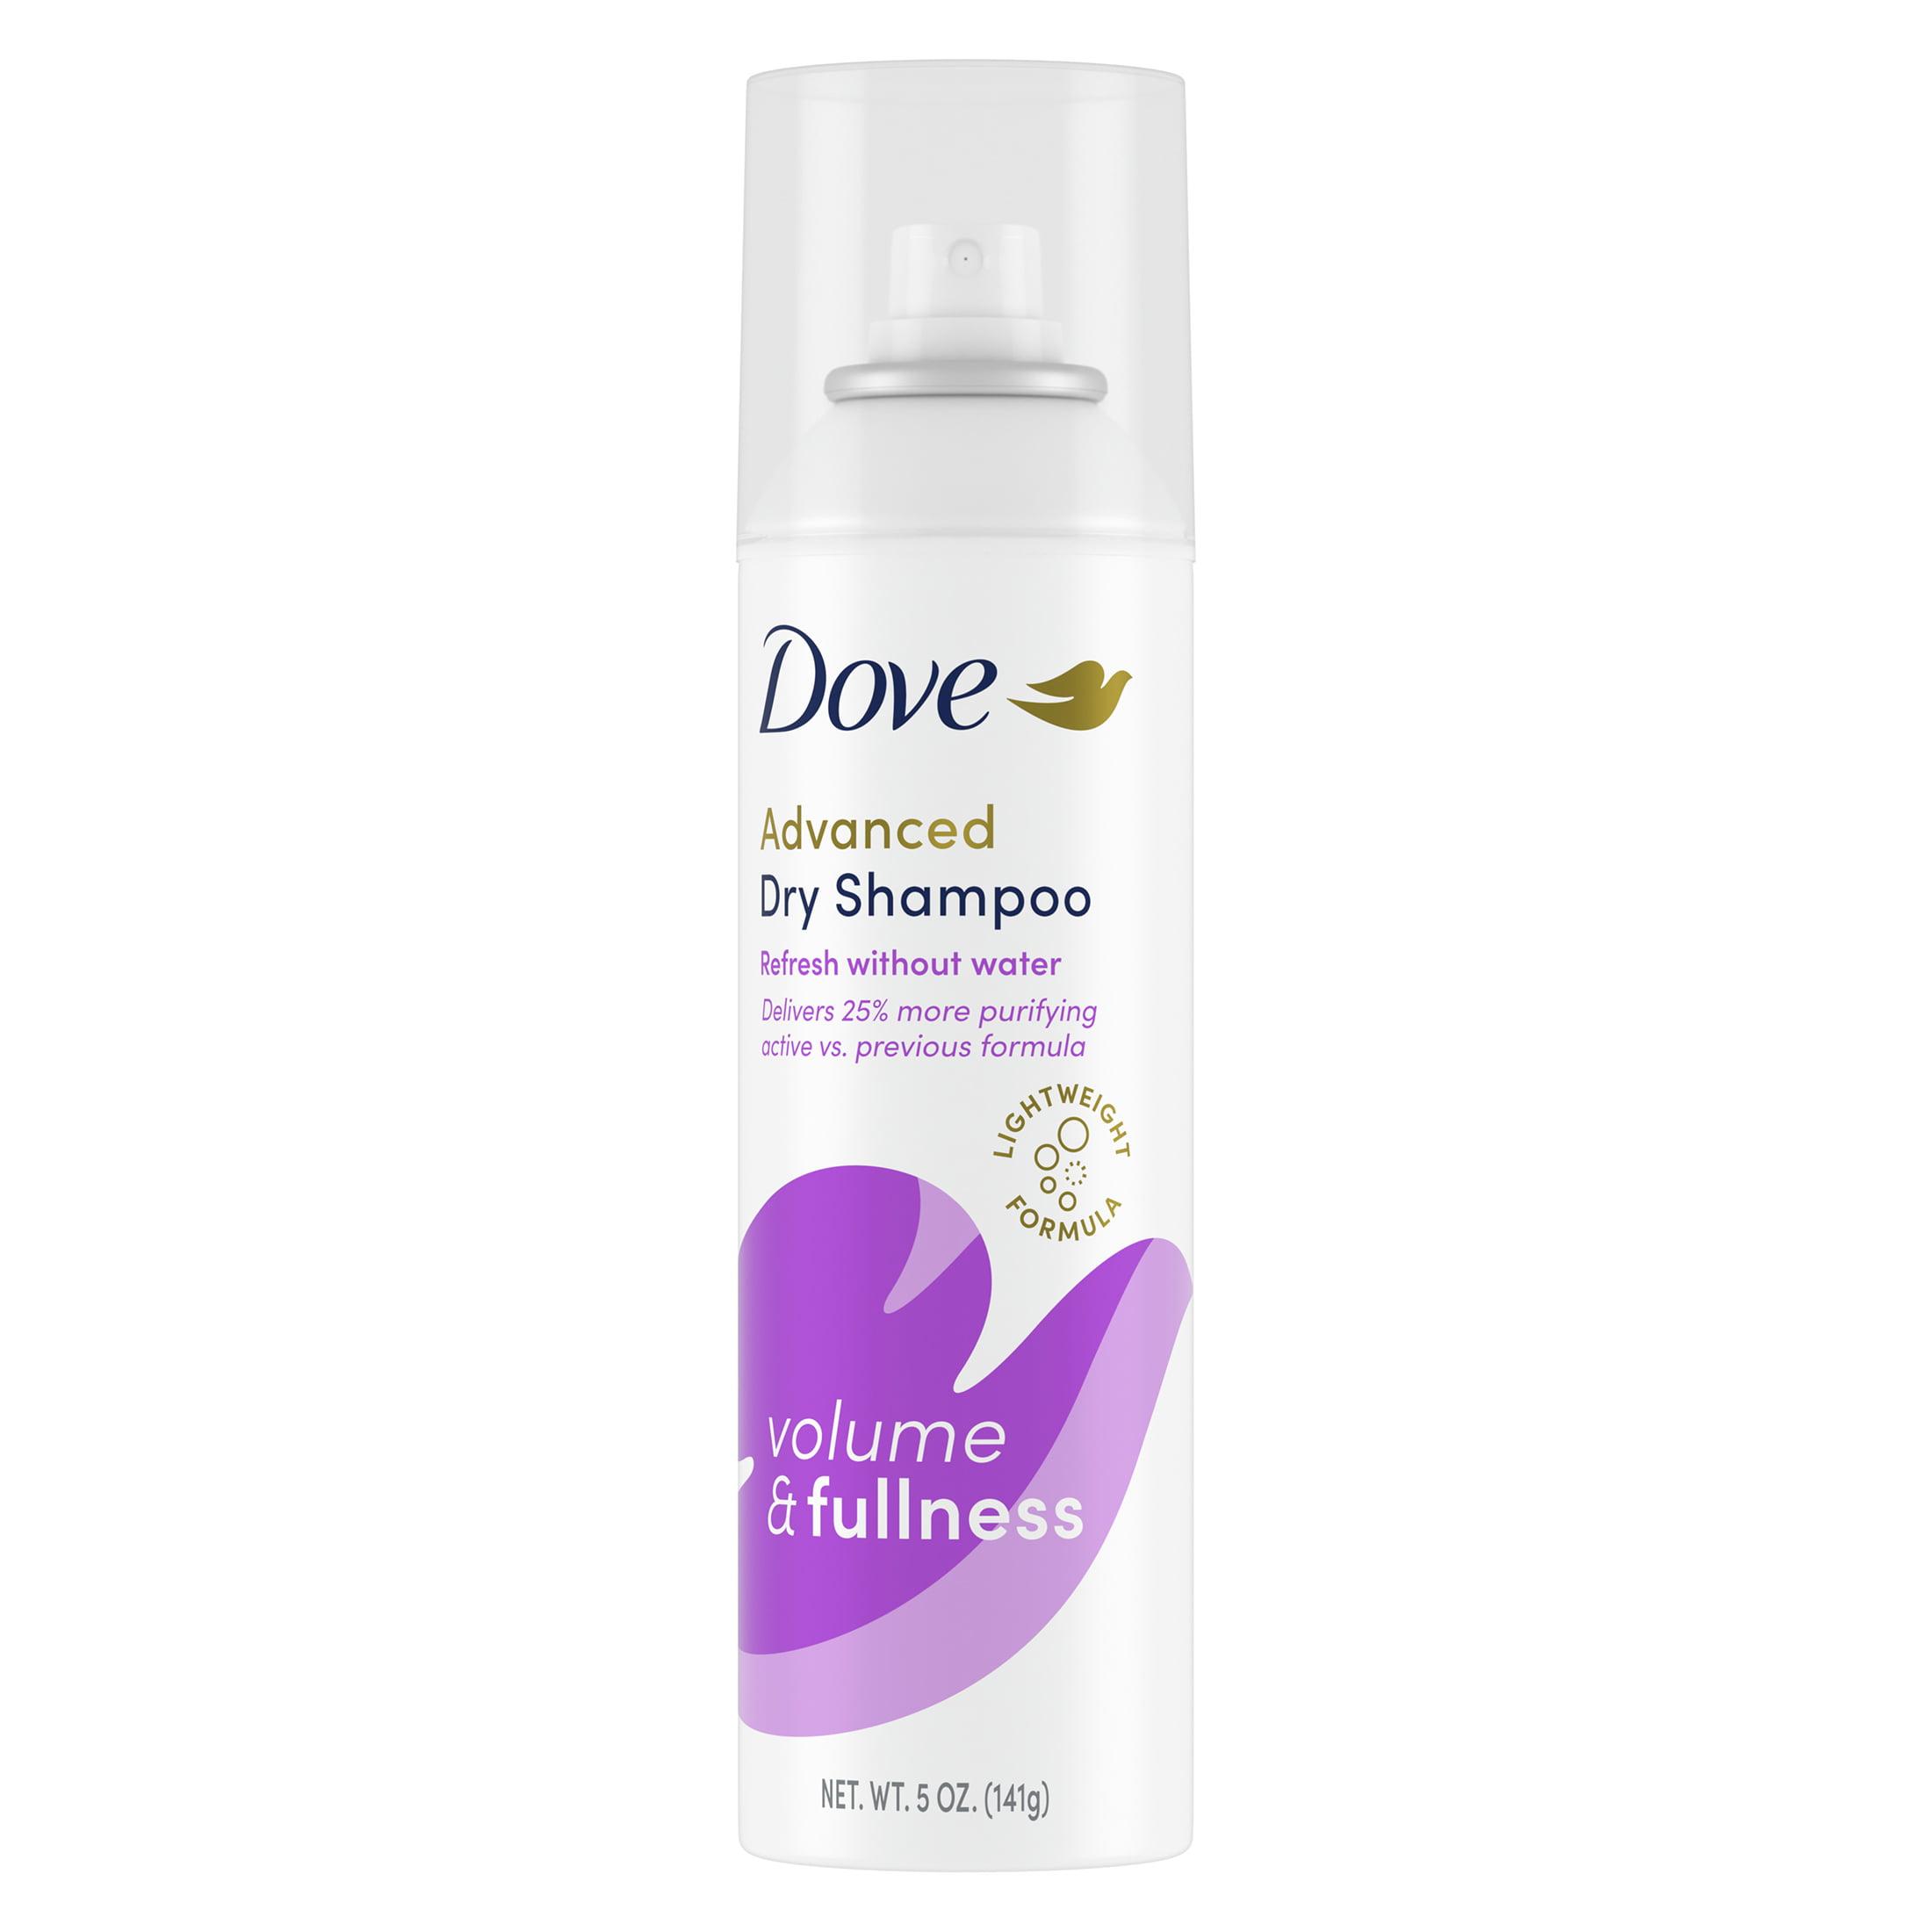 Dove Advanced Volume and Fullness Dry Shampoo, 5 oz - image 1 of 8